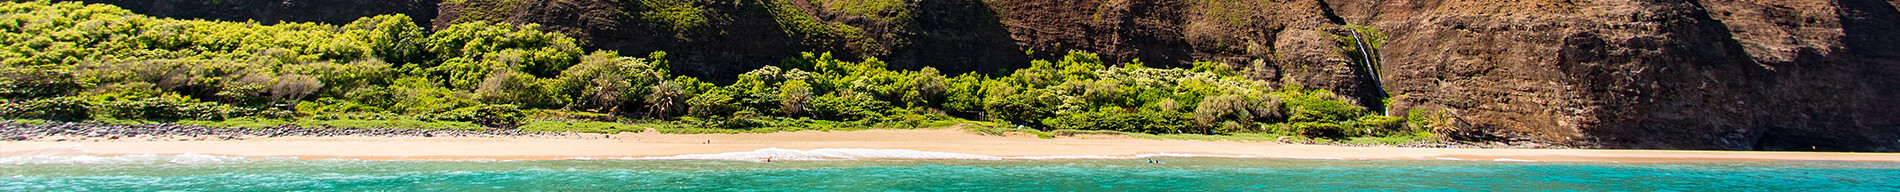 Landscape view of beach on Kauai